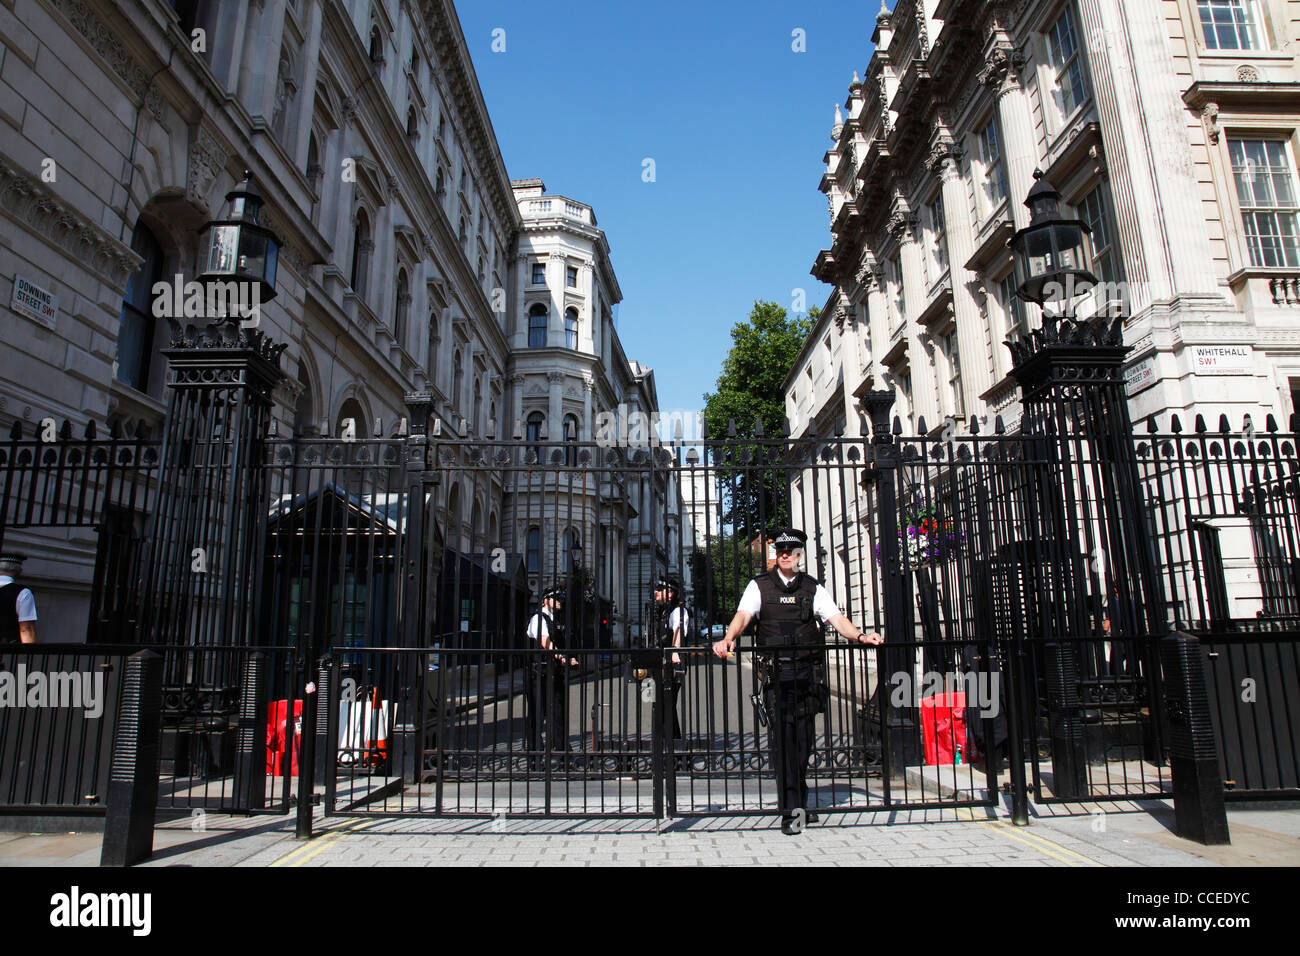 Polizia armata guardia dell'ingresso a Downing Street, Westminster, London, England, Regno Unito Foto Stock